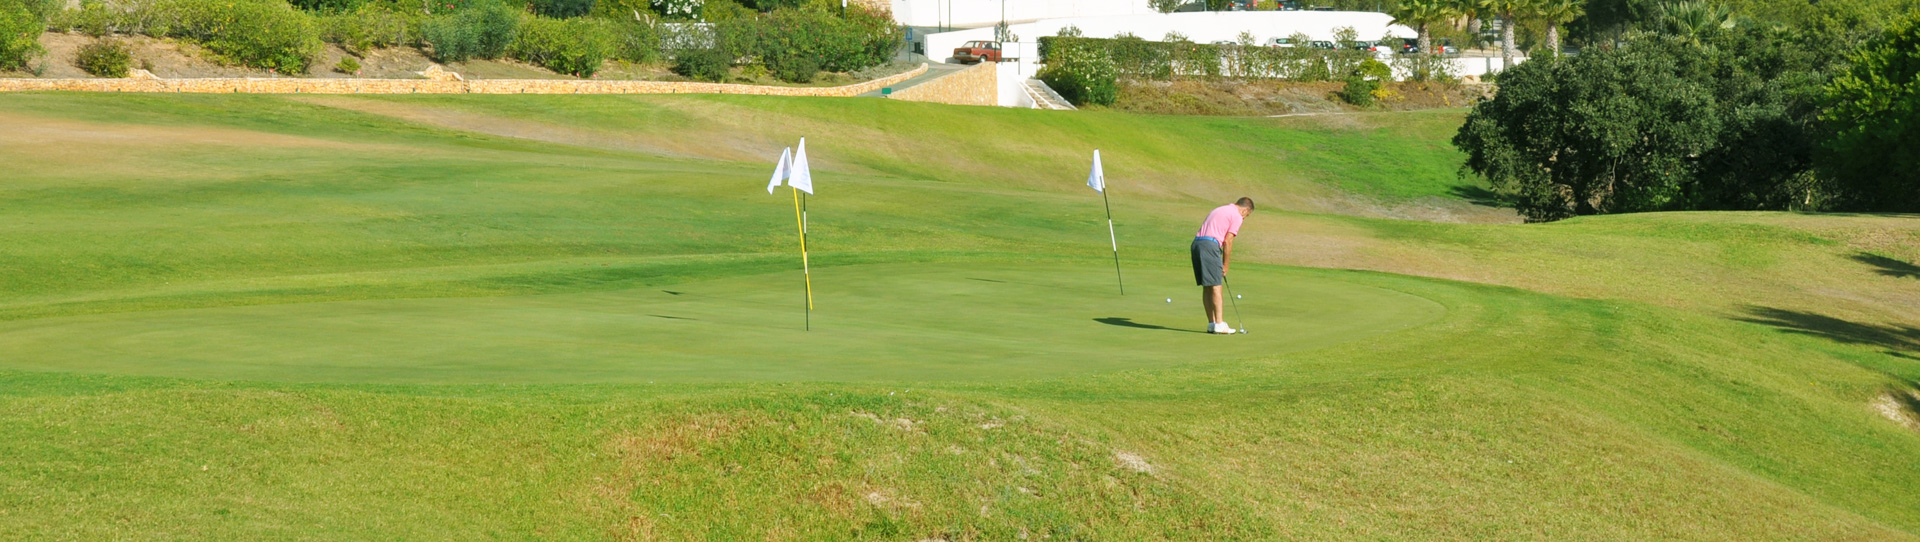 Portugal golf courses - Santo Antonio Golf  - Photo 2